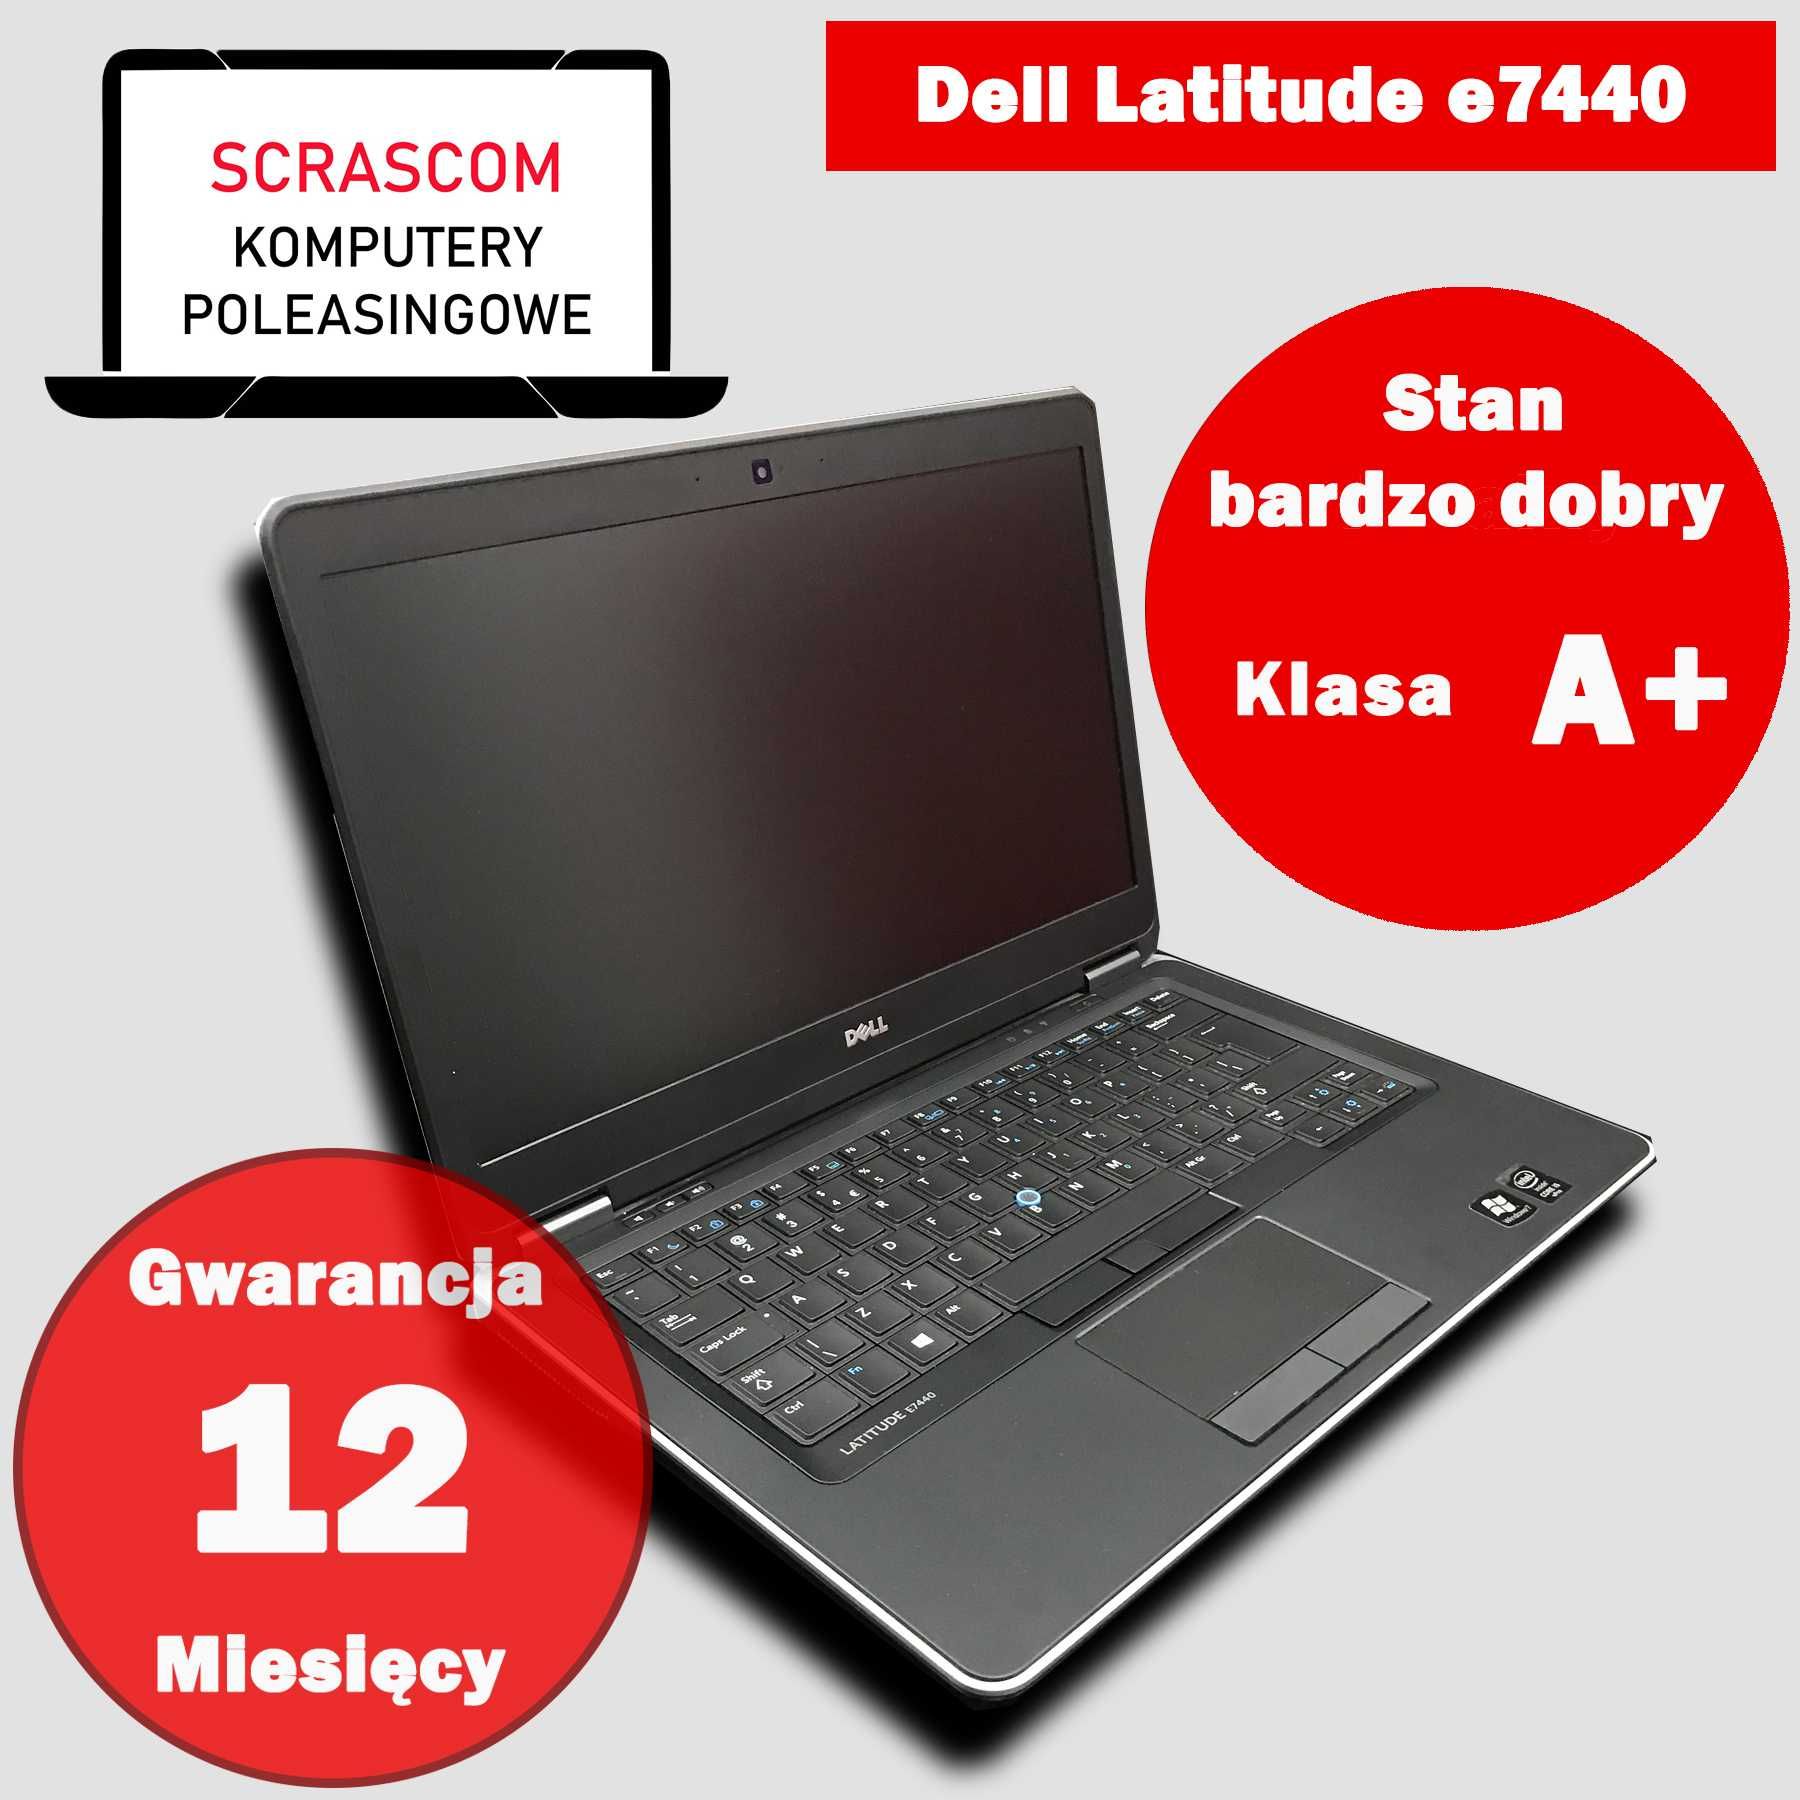 Laptop Dell Latitude E7440 i5 8GB 256GB SSD Windows 10 GWAR 12msc